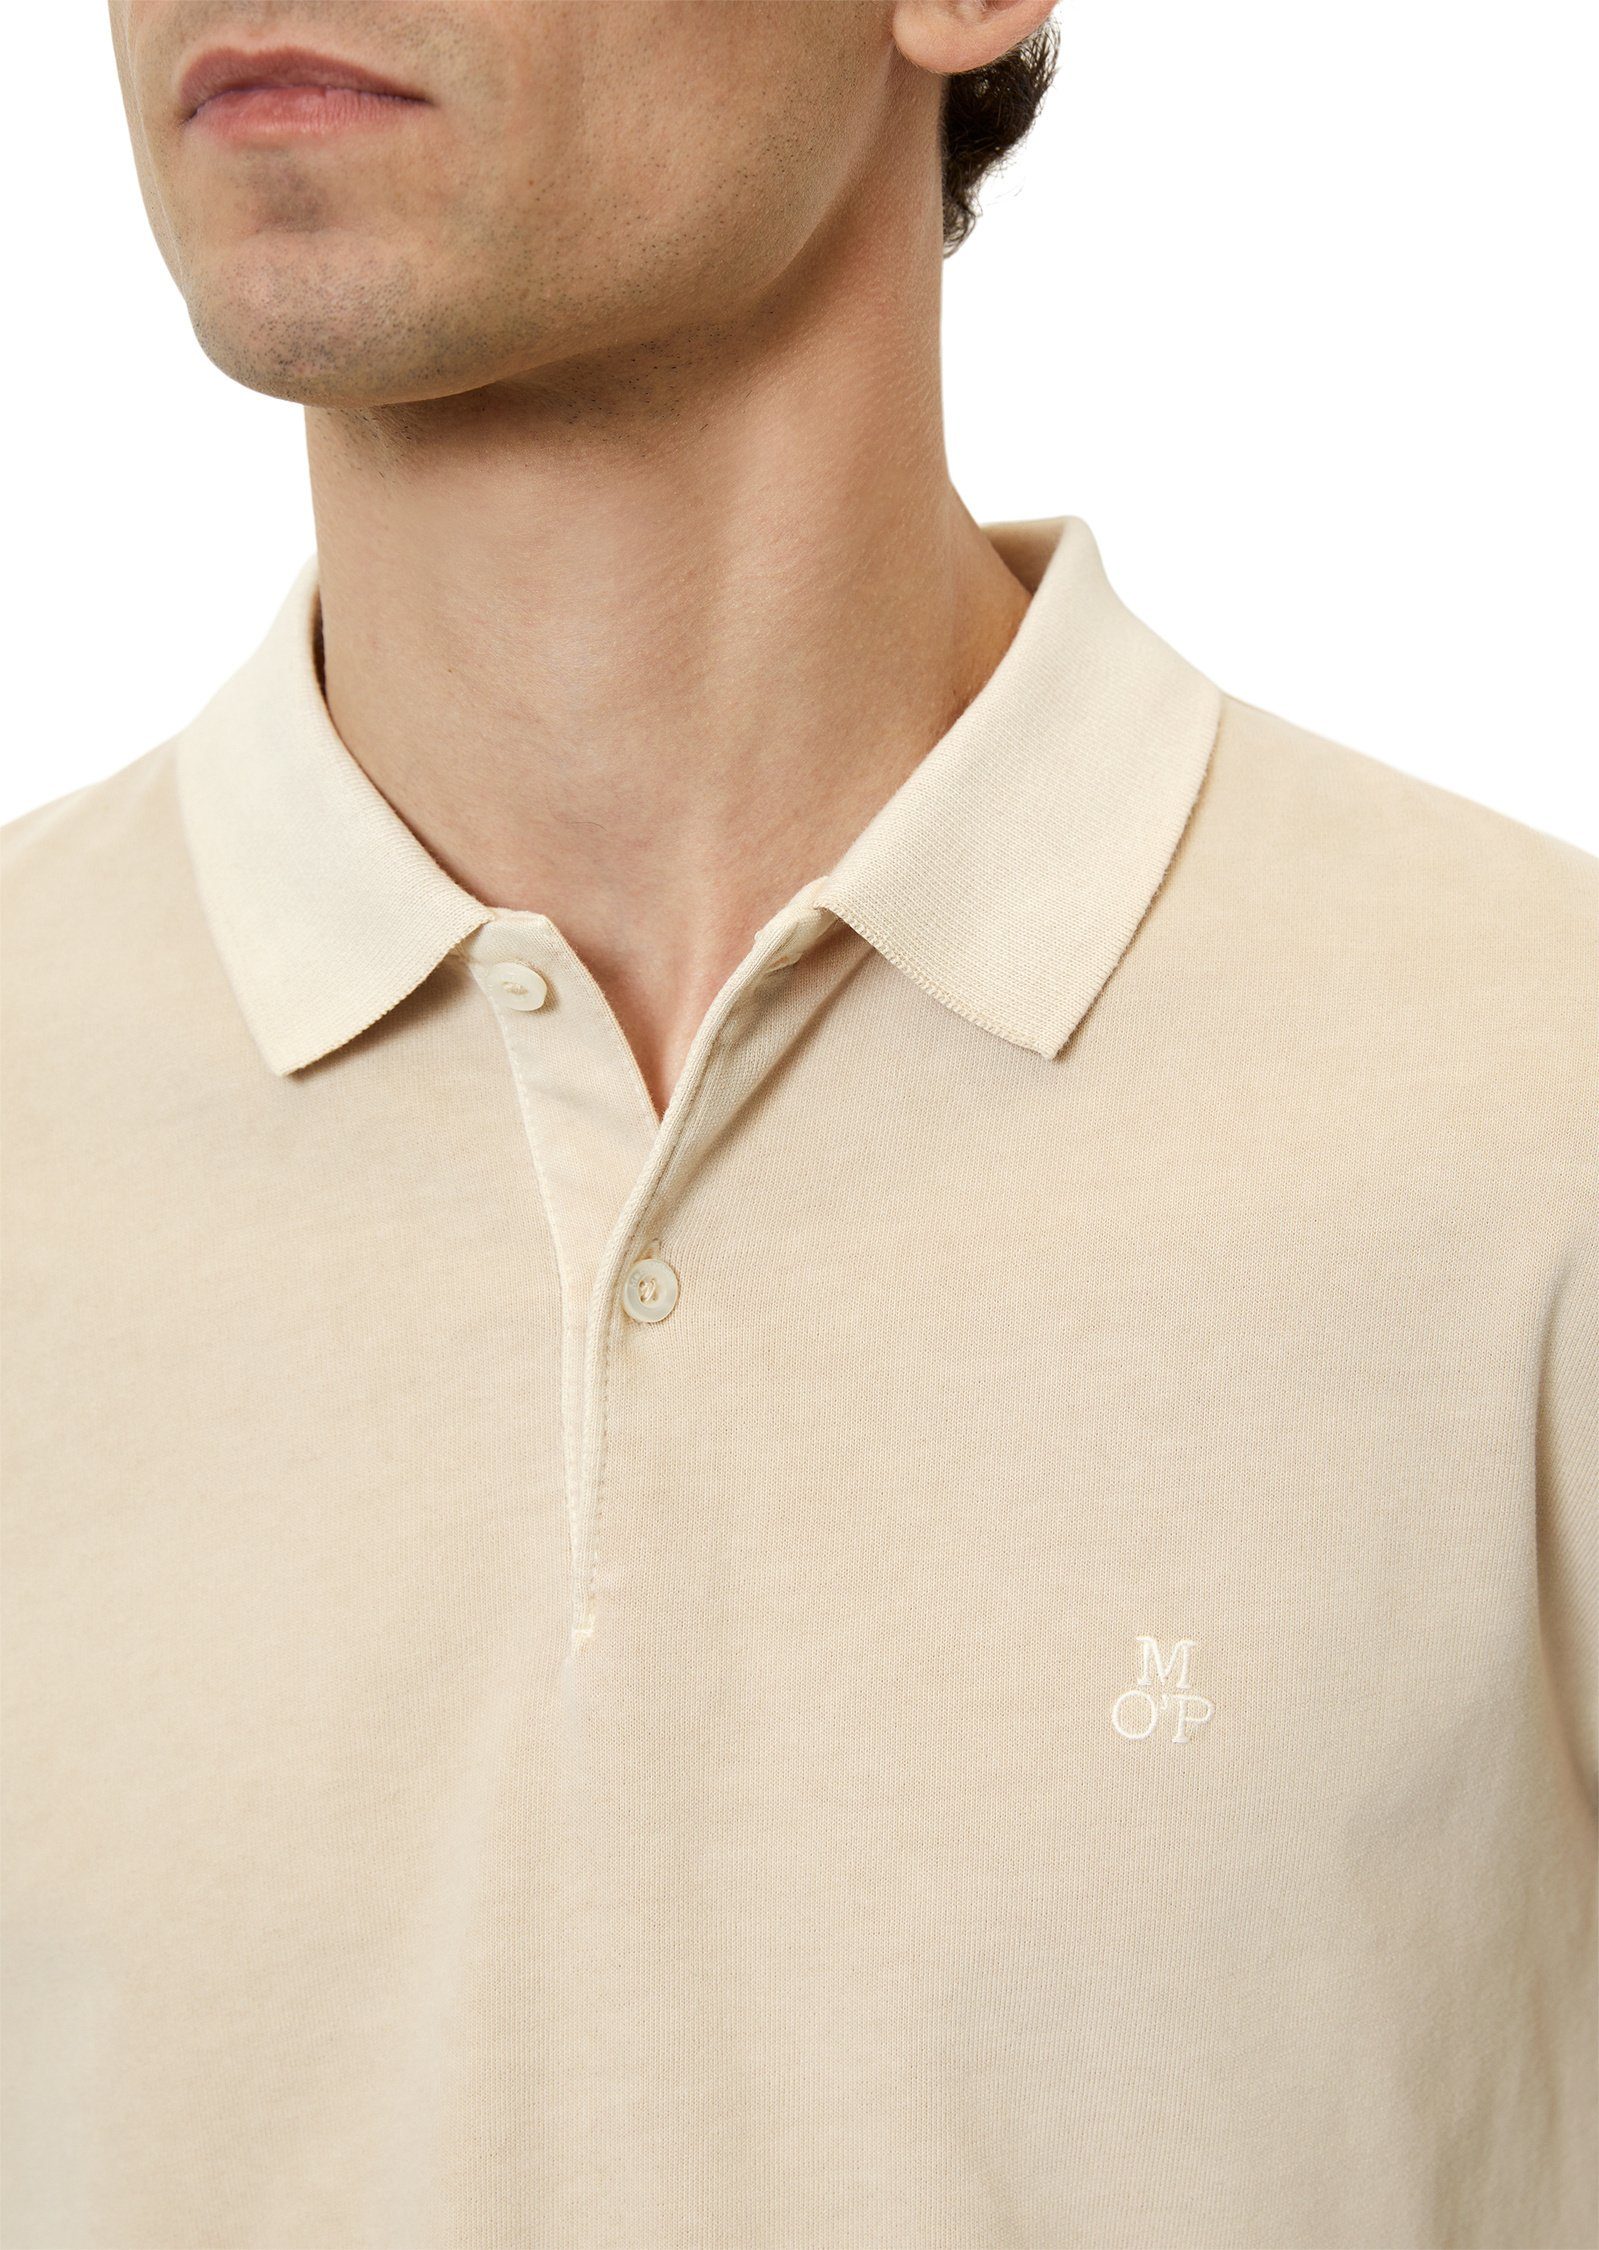 Marc beige schwerer in Soft-Touch-Jersey-Qualität O'Polo Langarm-Poloshirt